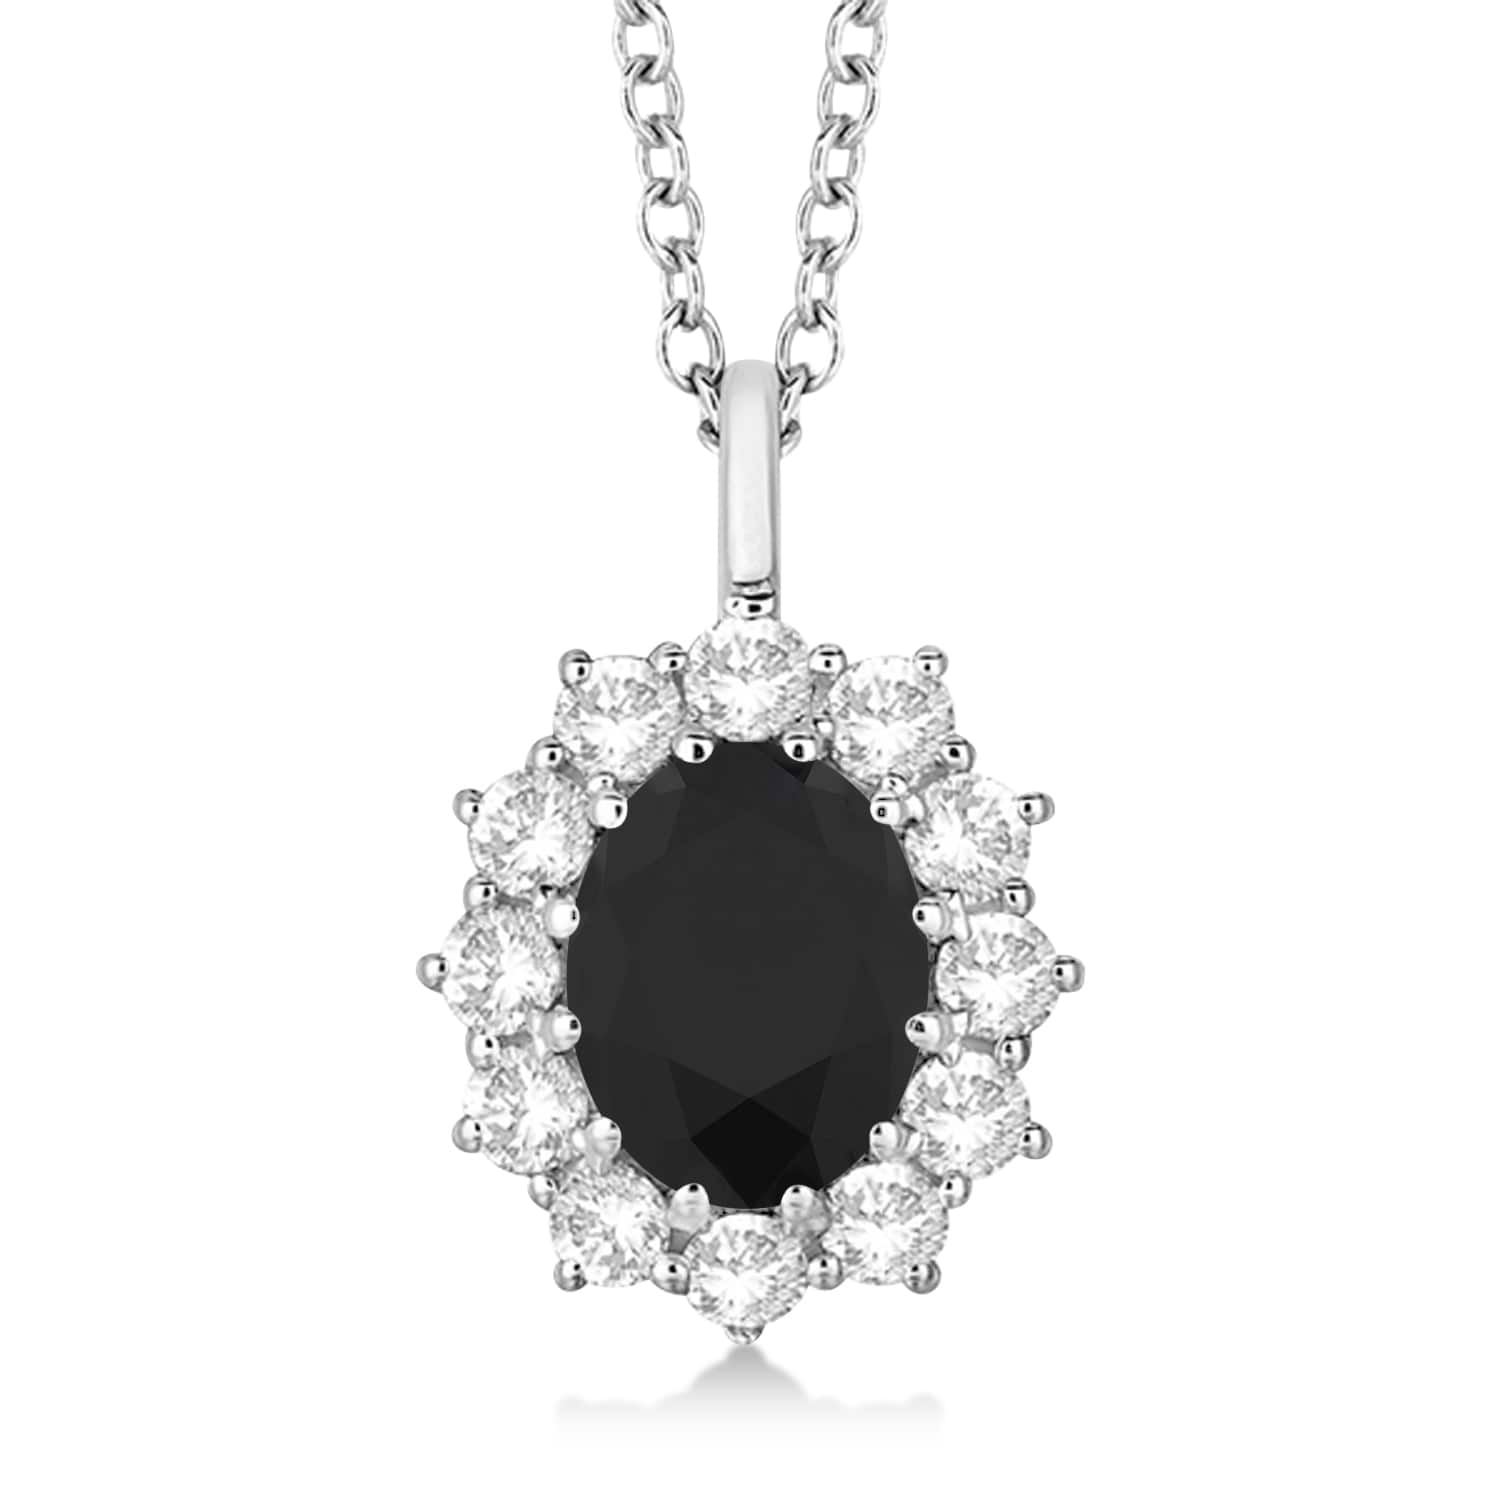 Oval Black & White Diamond Pendant Necklace 14k White Gold (2.80ctw)